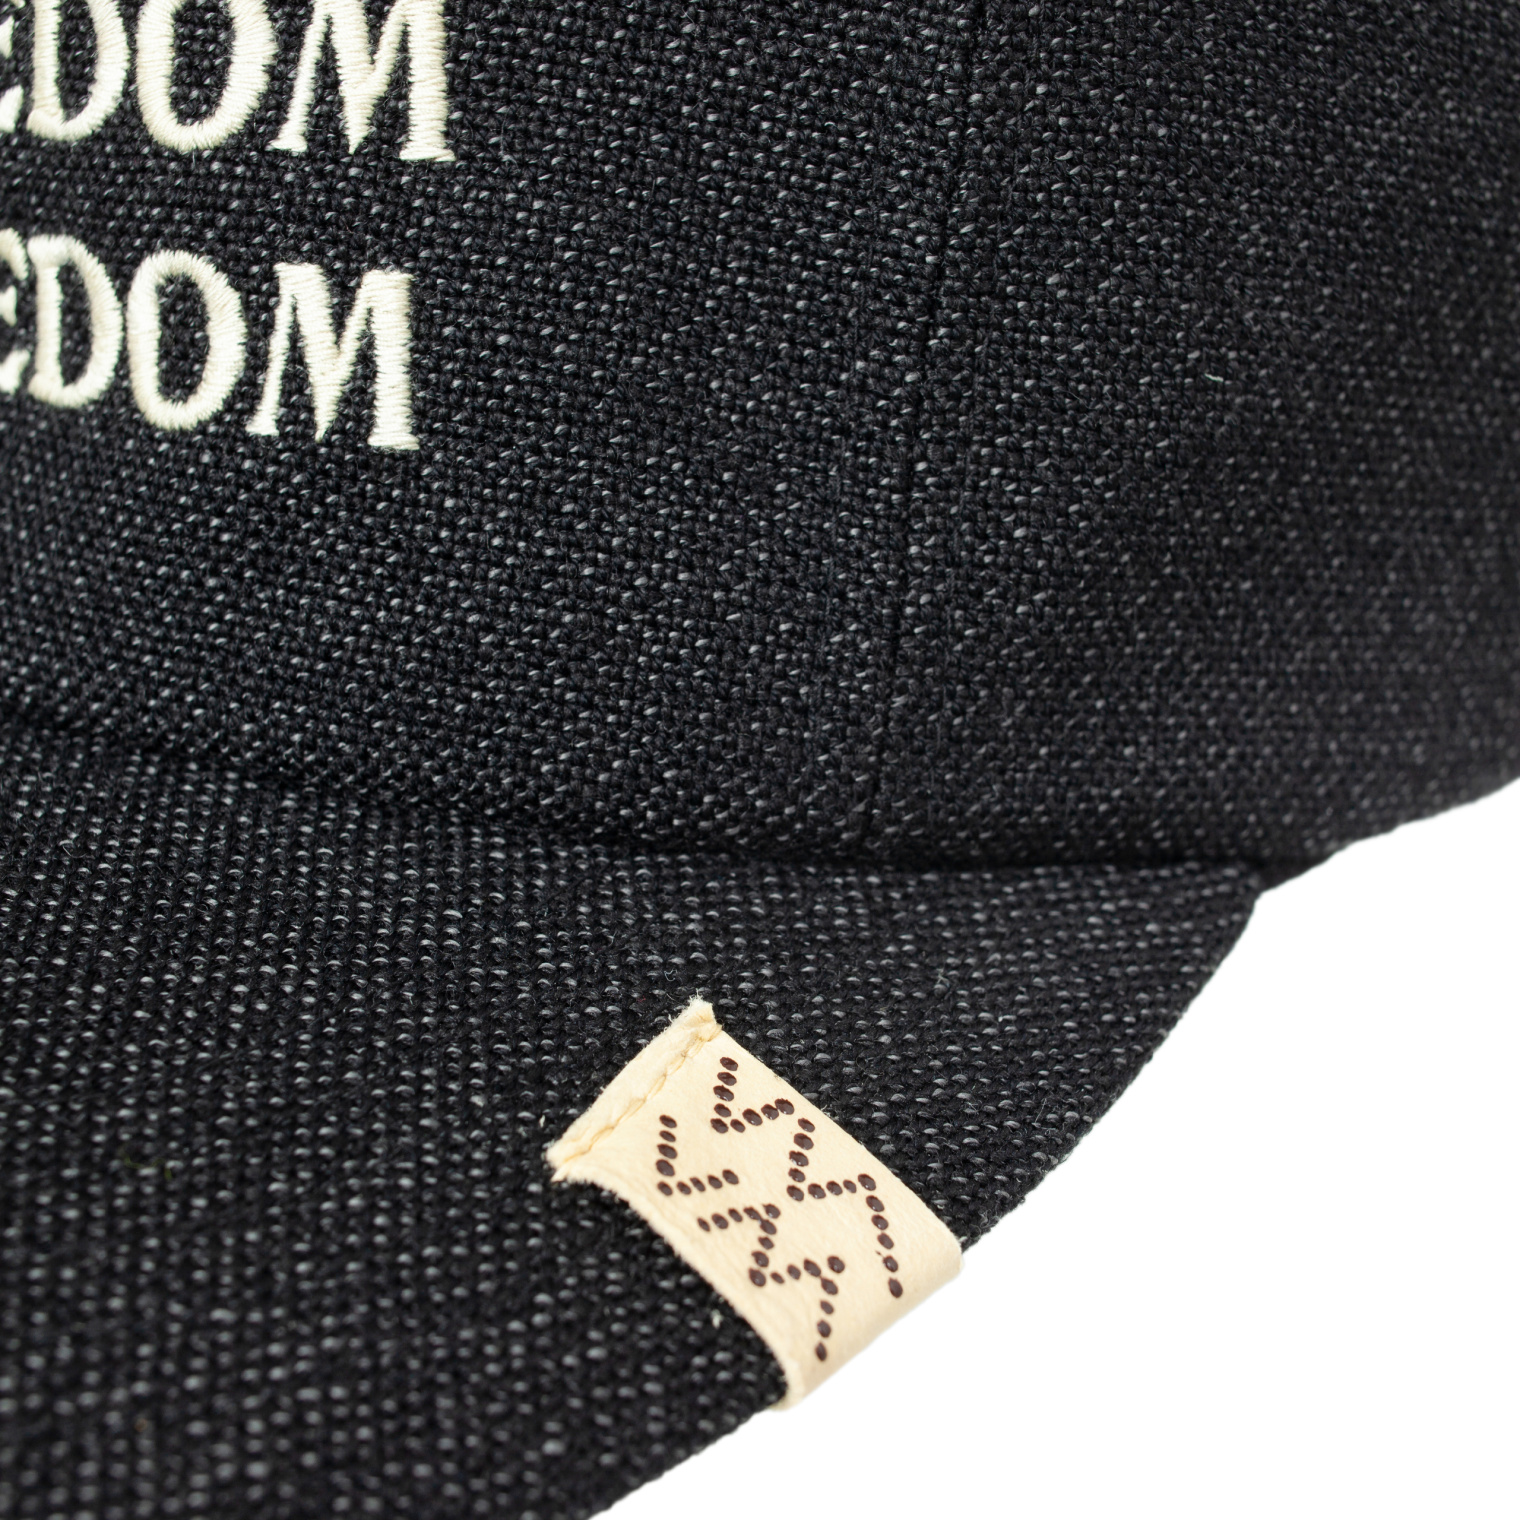 visvim Freedom embroidered logo cap